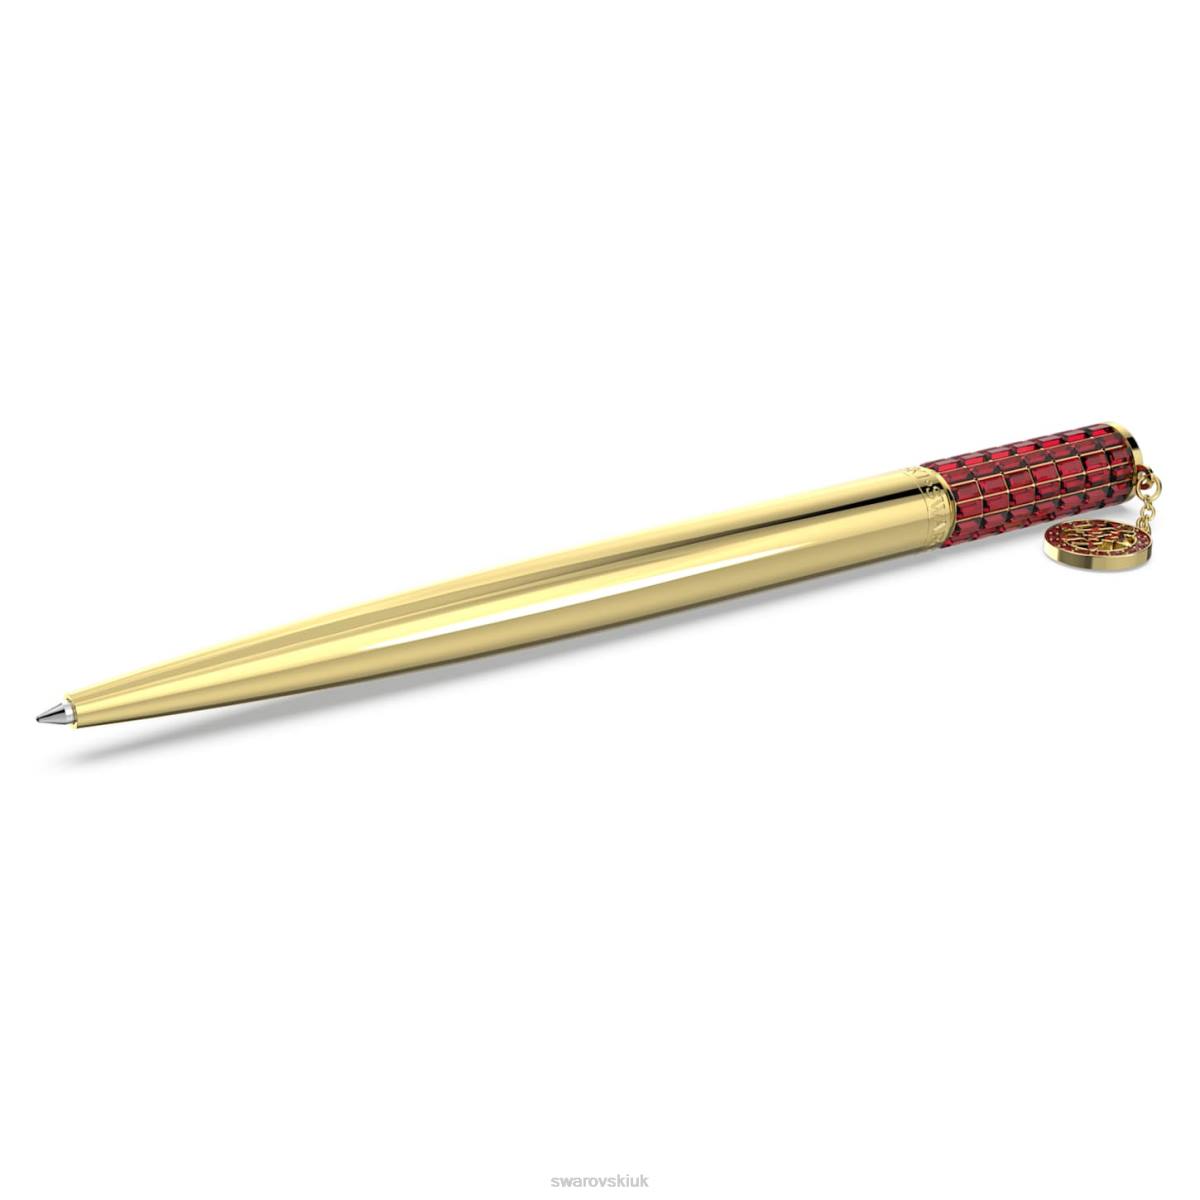 Accessories Swarovski Alea ballpoint pen Red, Gold-tone plated 48JX1300